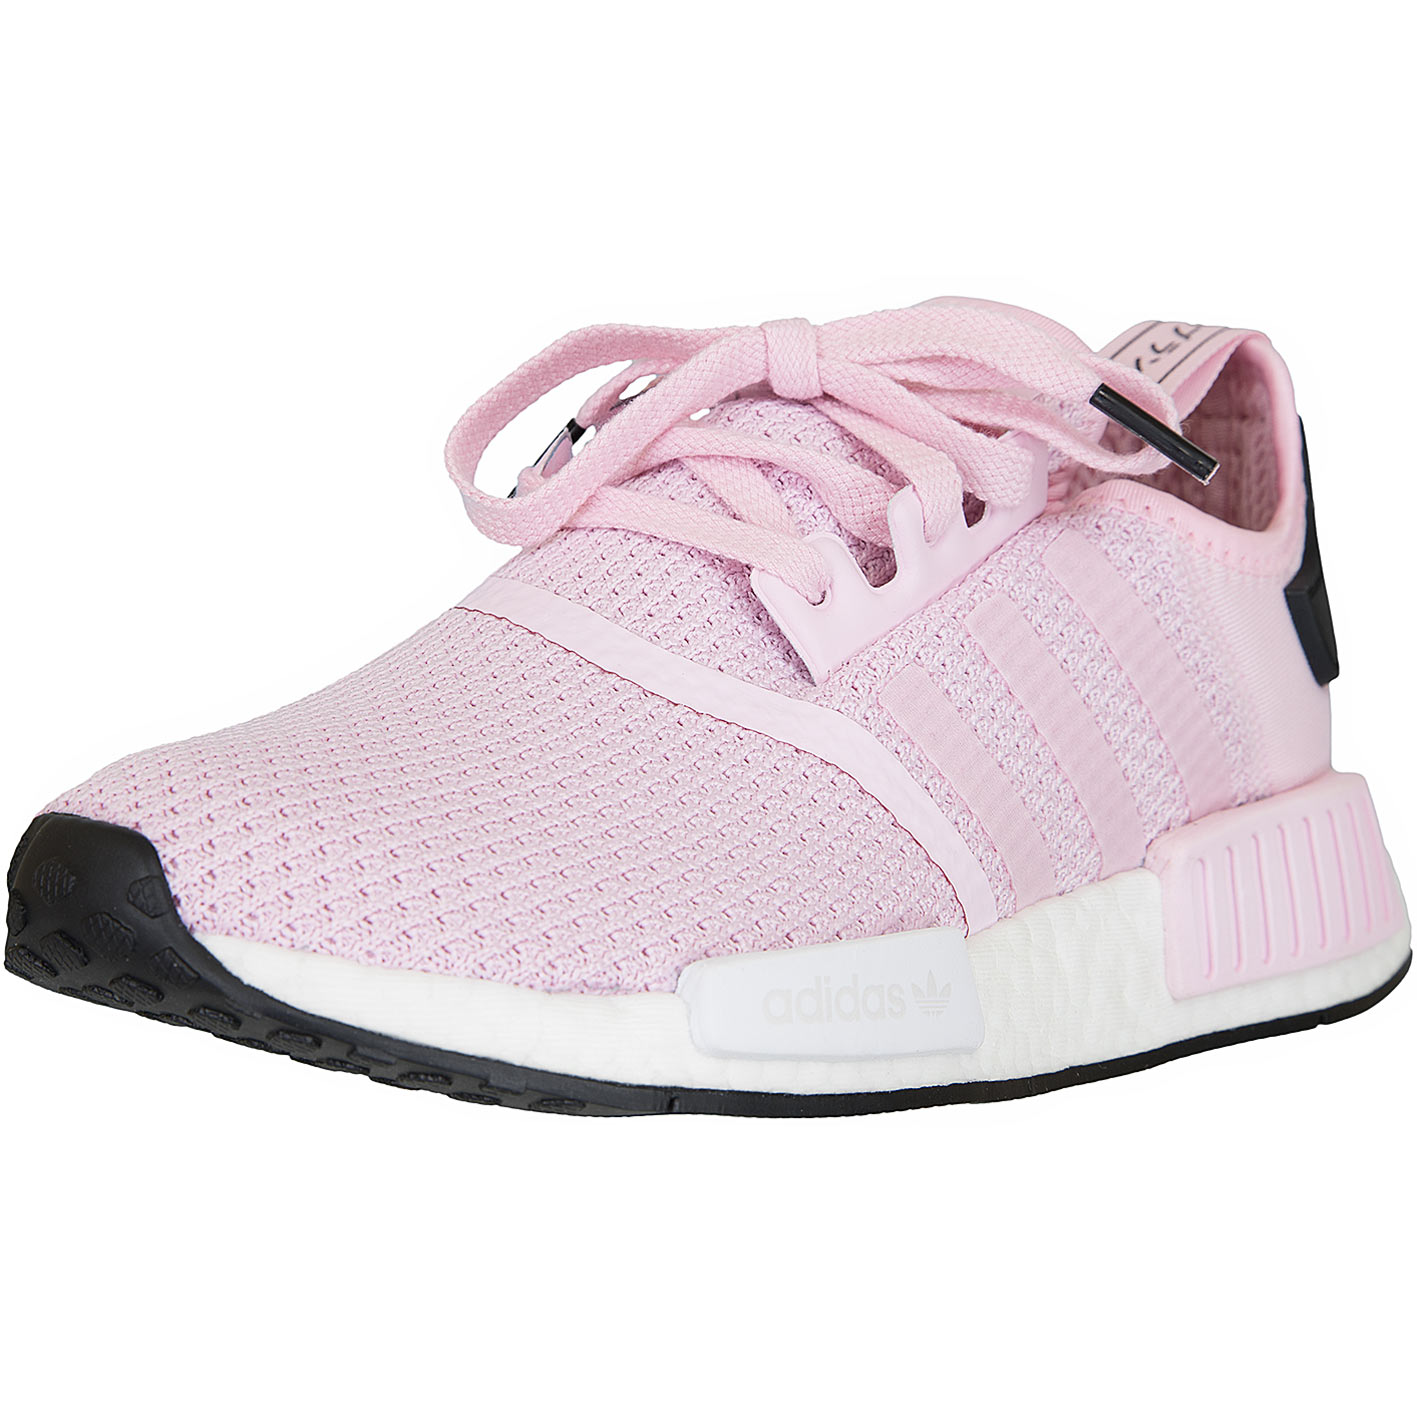 Adidas Originals Damen Sneaker NMD R1 pink  hier bestellen 